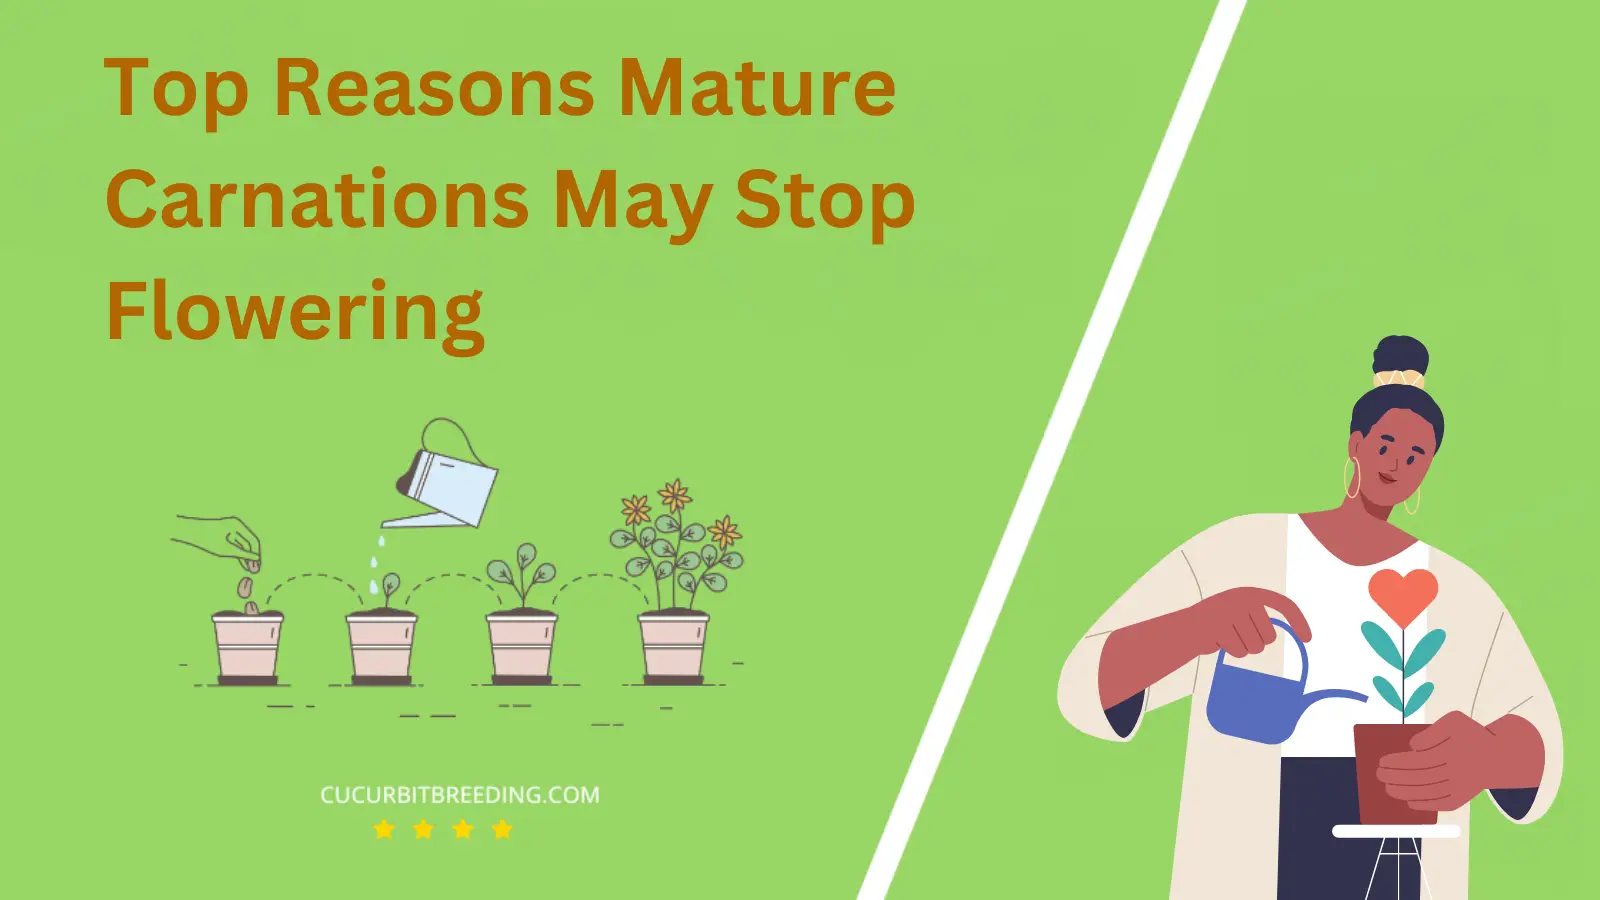 Top Reasons Mature Carnations May Stop Flowering